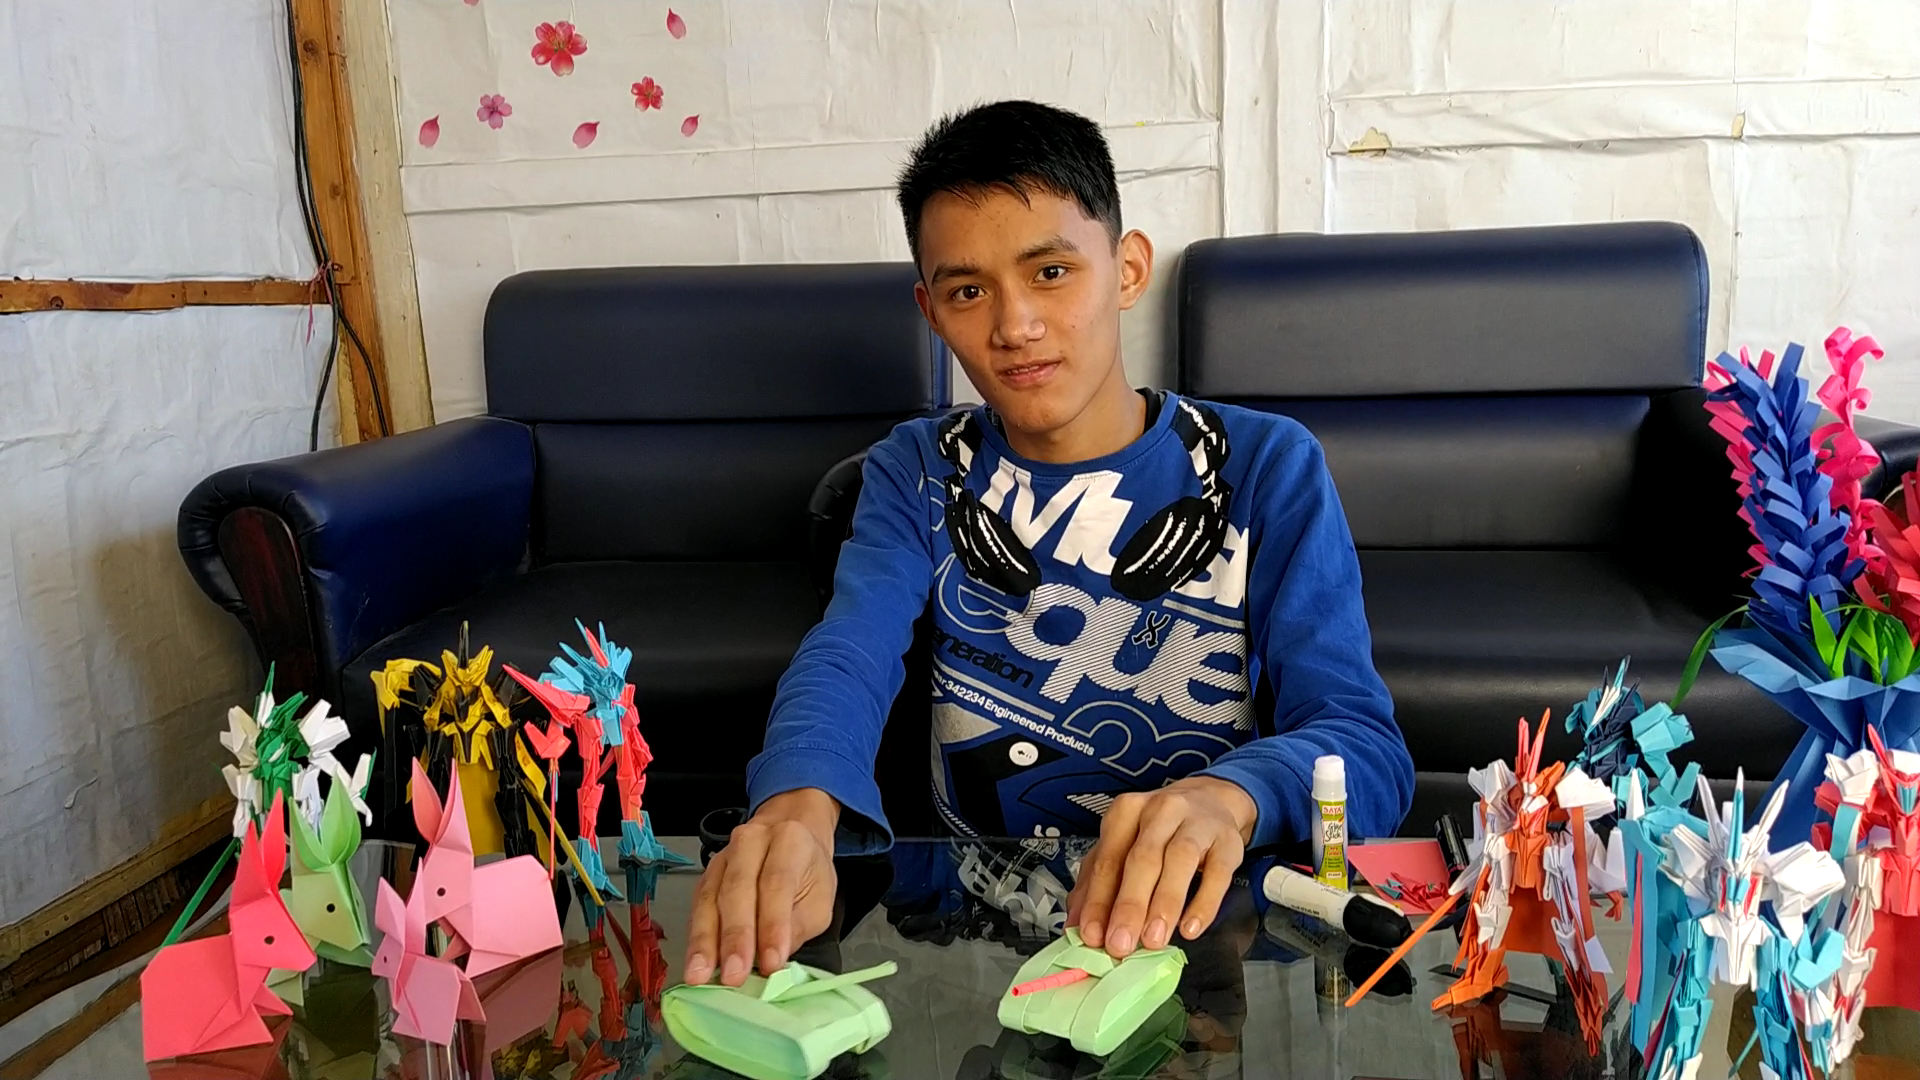 Origami Boy: Wapangsang Aier bringing art to shape